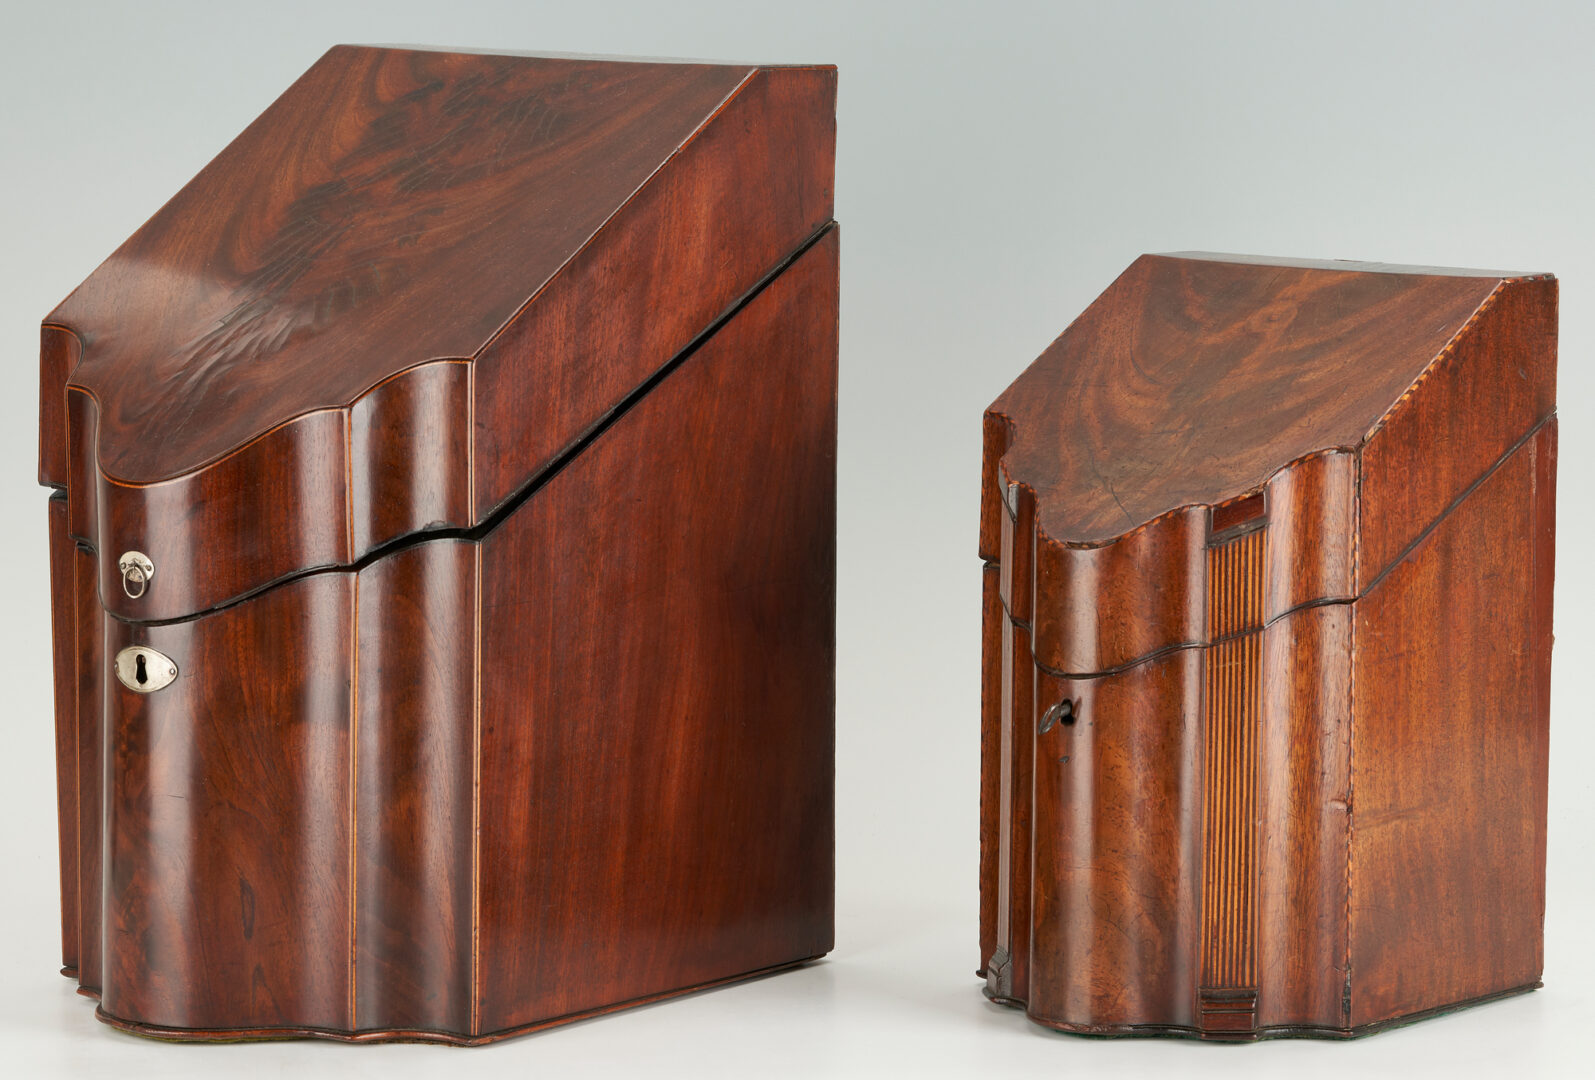 Lot 229: 4 English Wooden Boxes, incl. Knife Boxes, Tea Caddy, & Lap Desk